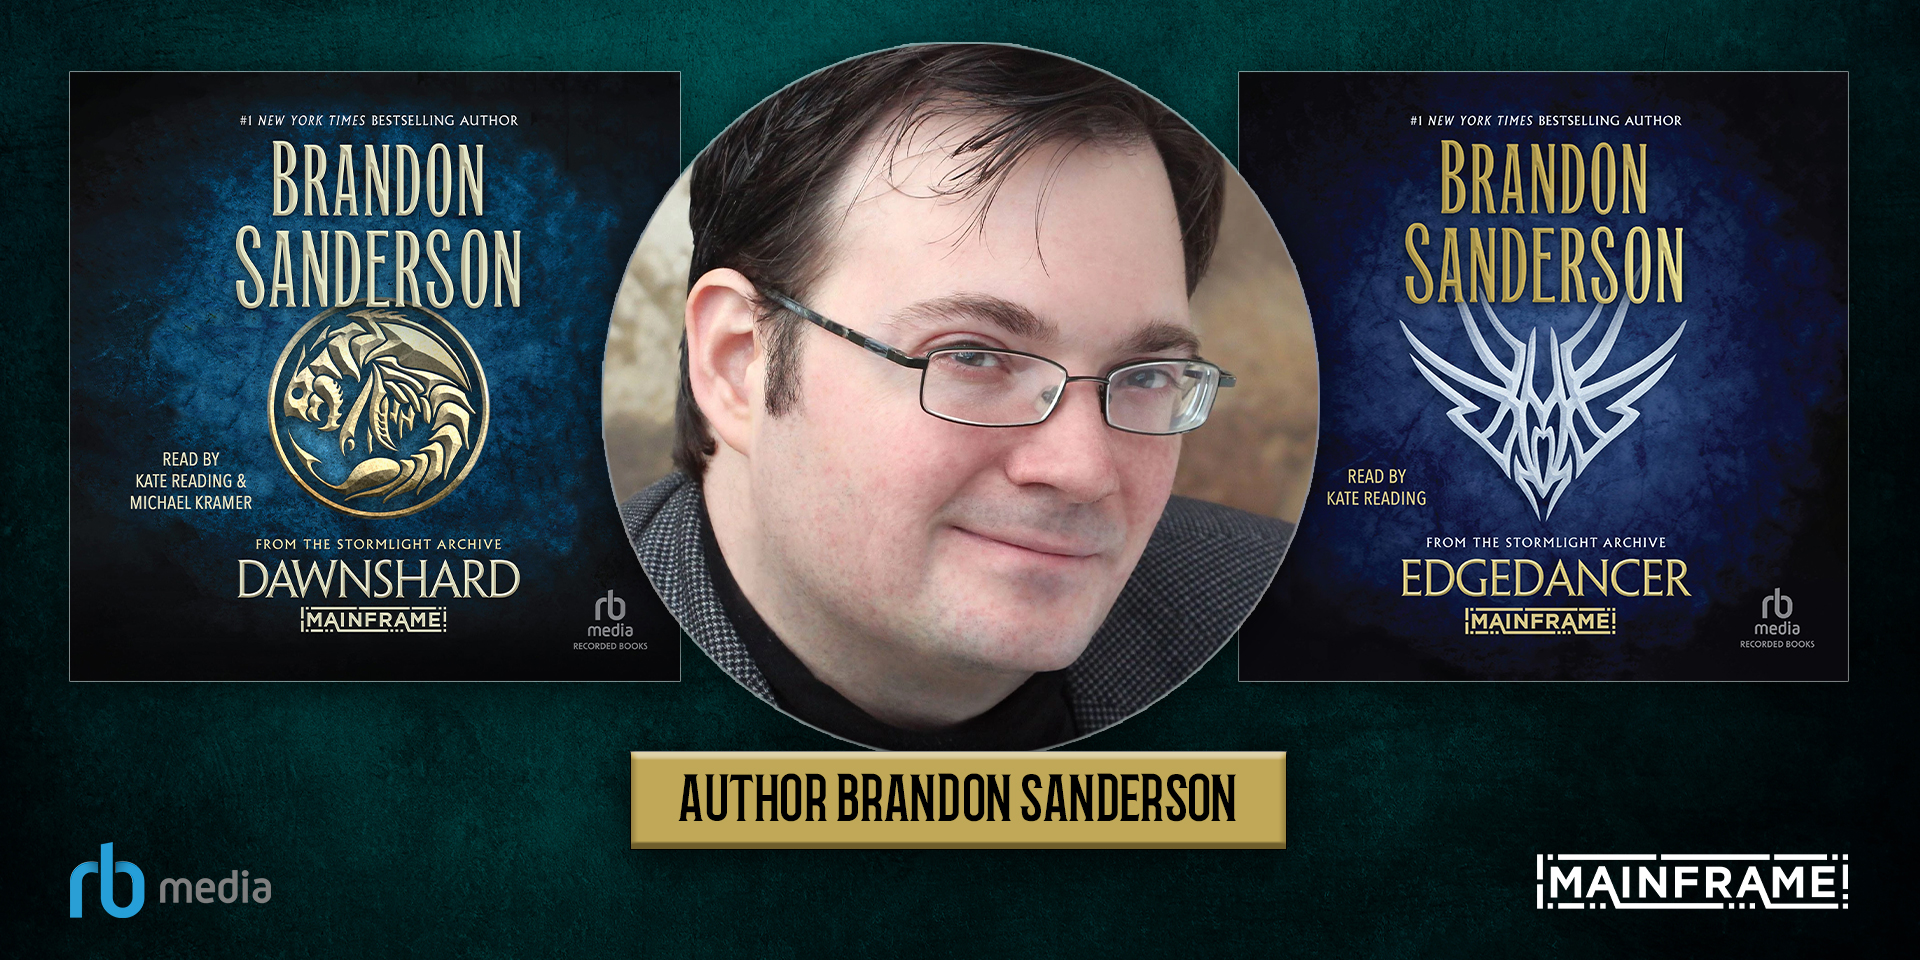 About Brandon Sanderson